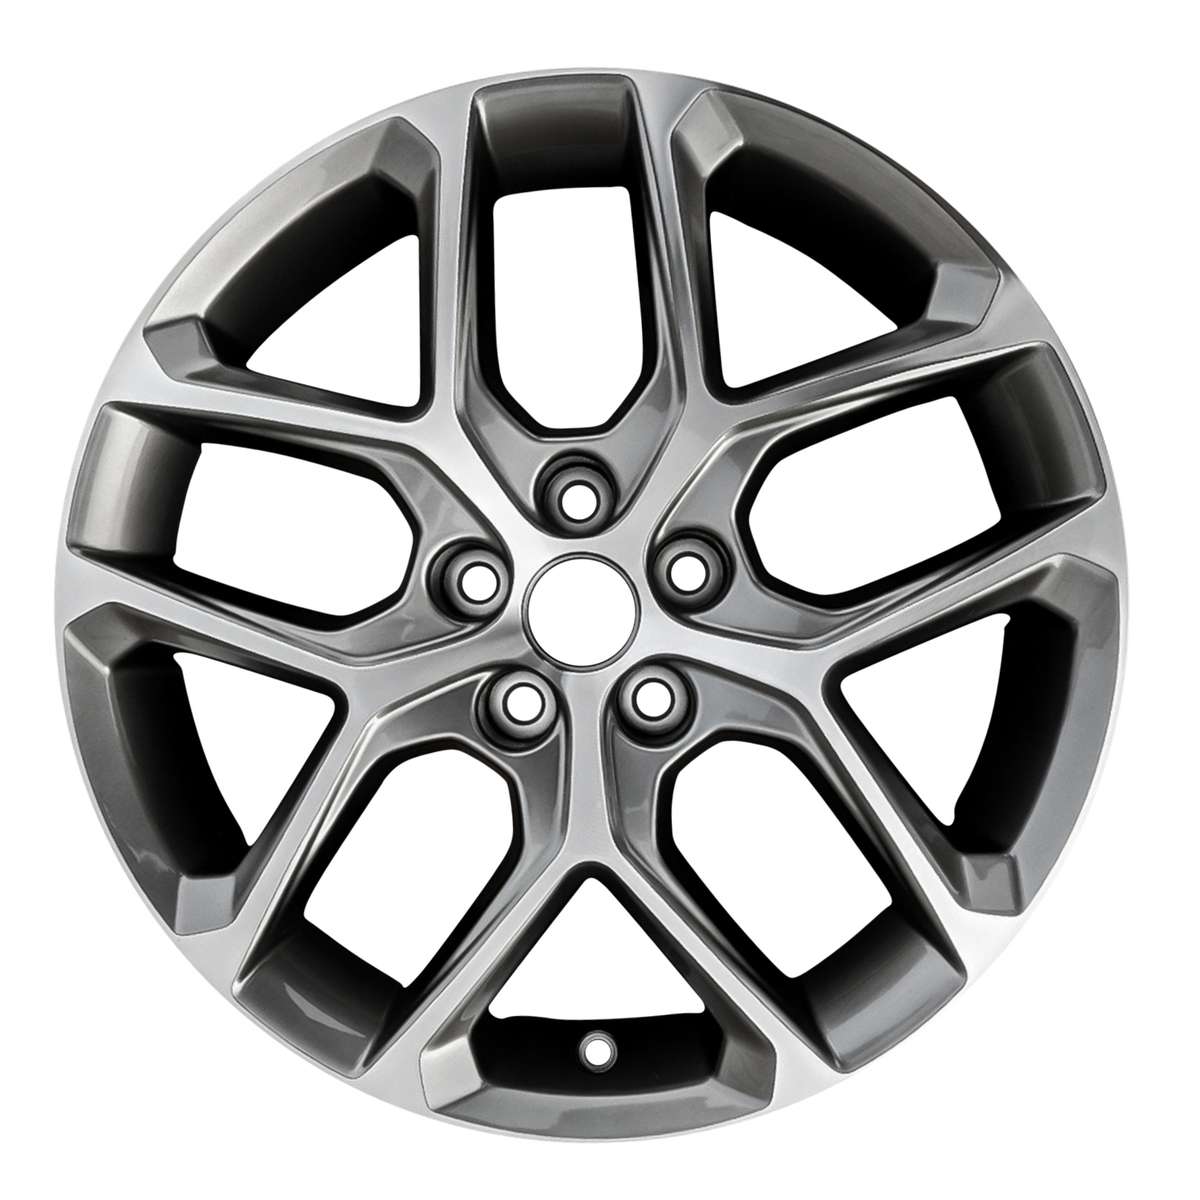 2018 Chevrolet Cruze 17" OEM Wheel Rim W5880MS